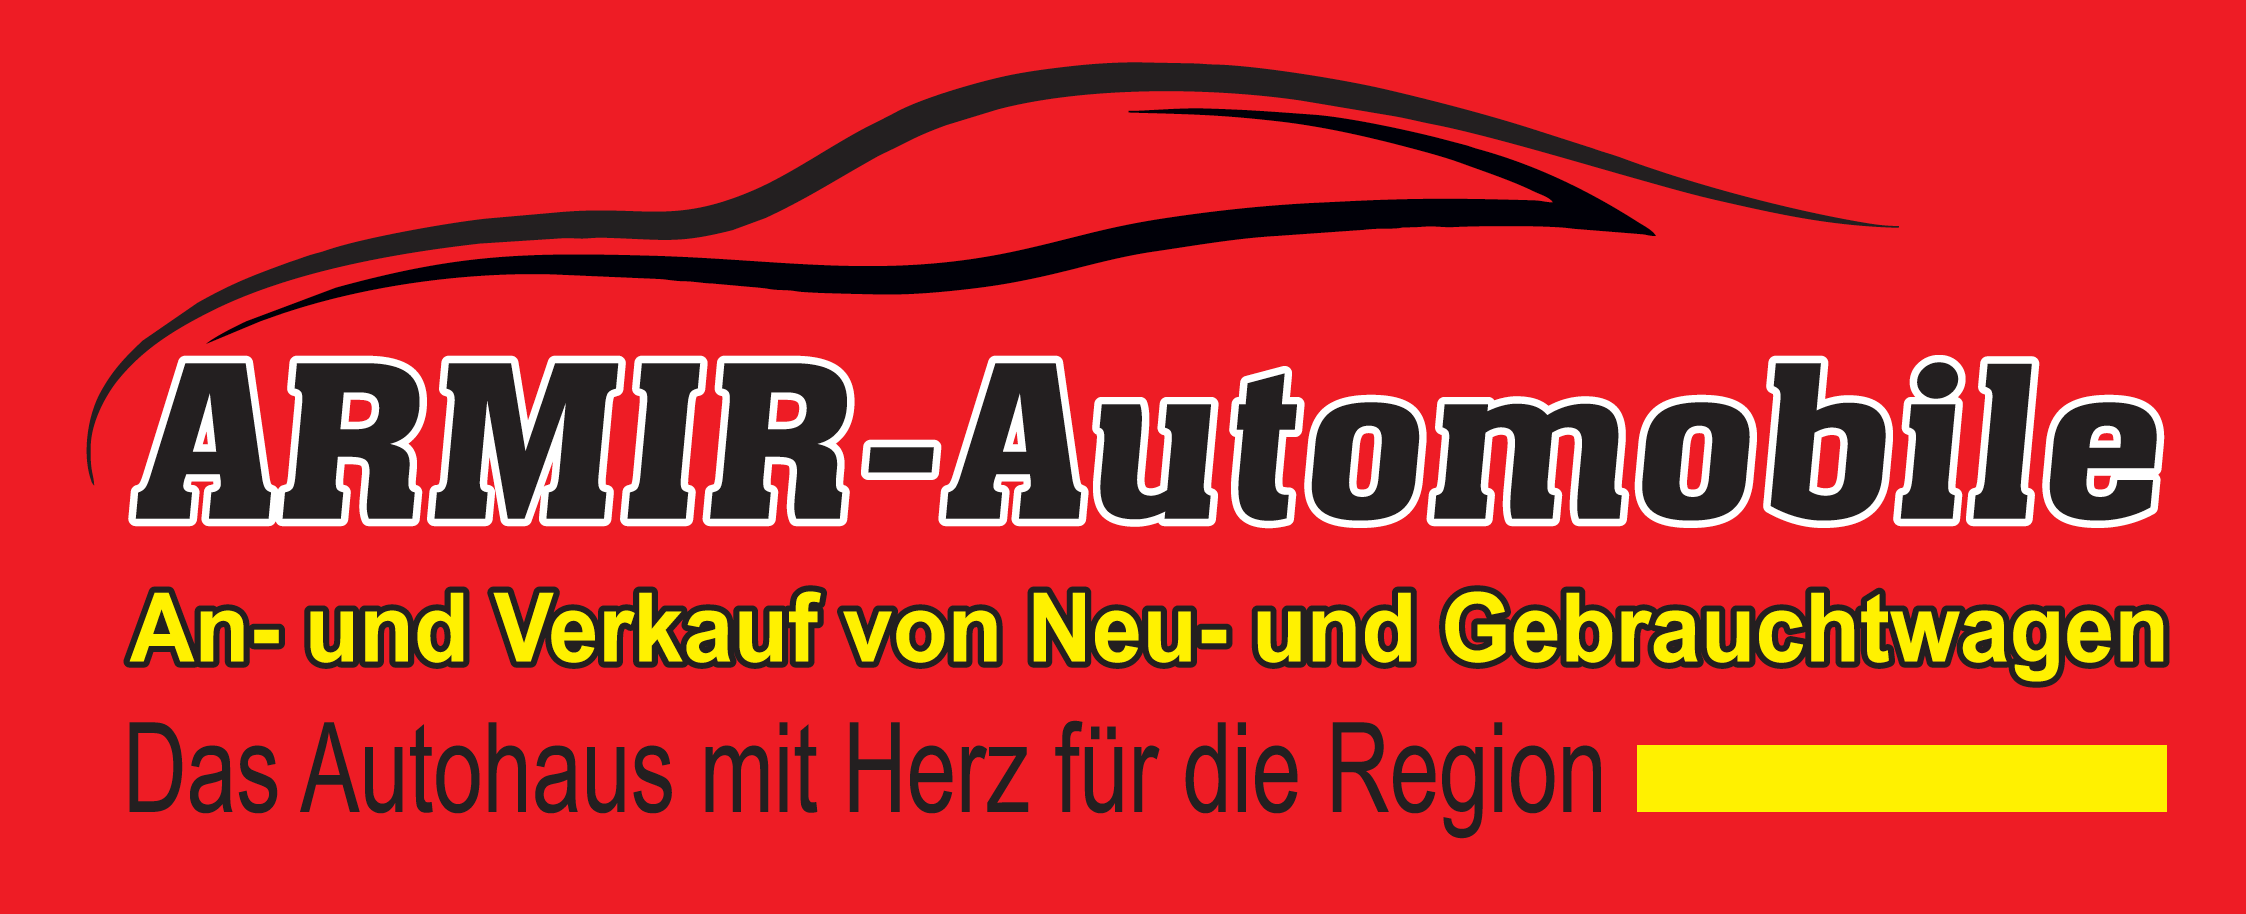 Armir Automobile Logo